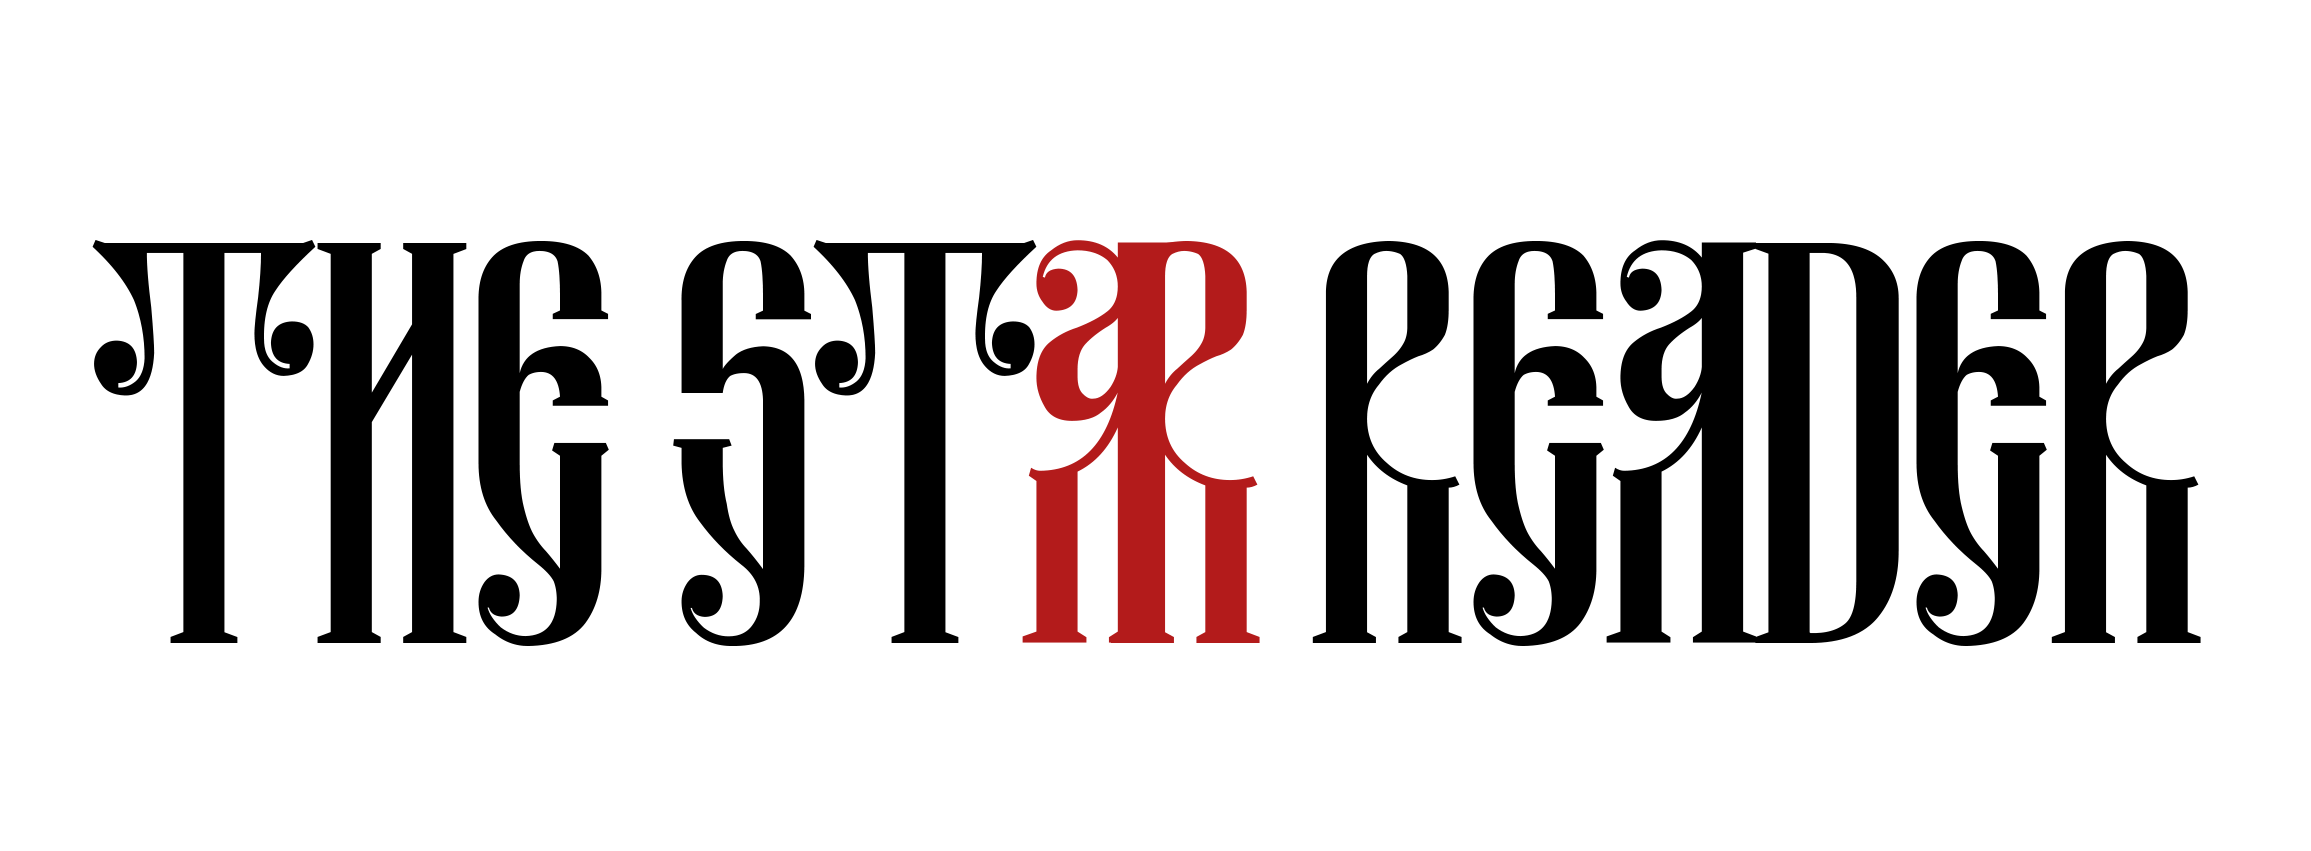 Svesdobroikata-logo-english-1